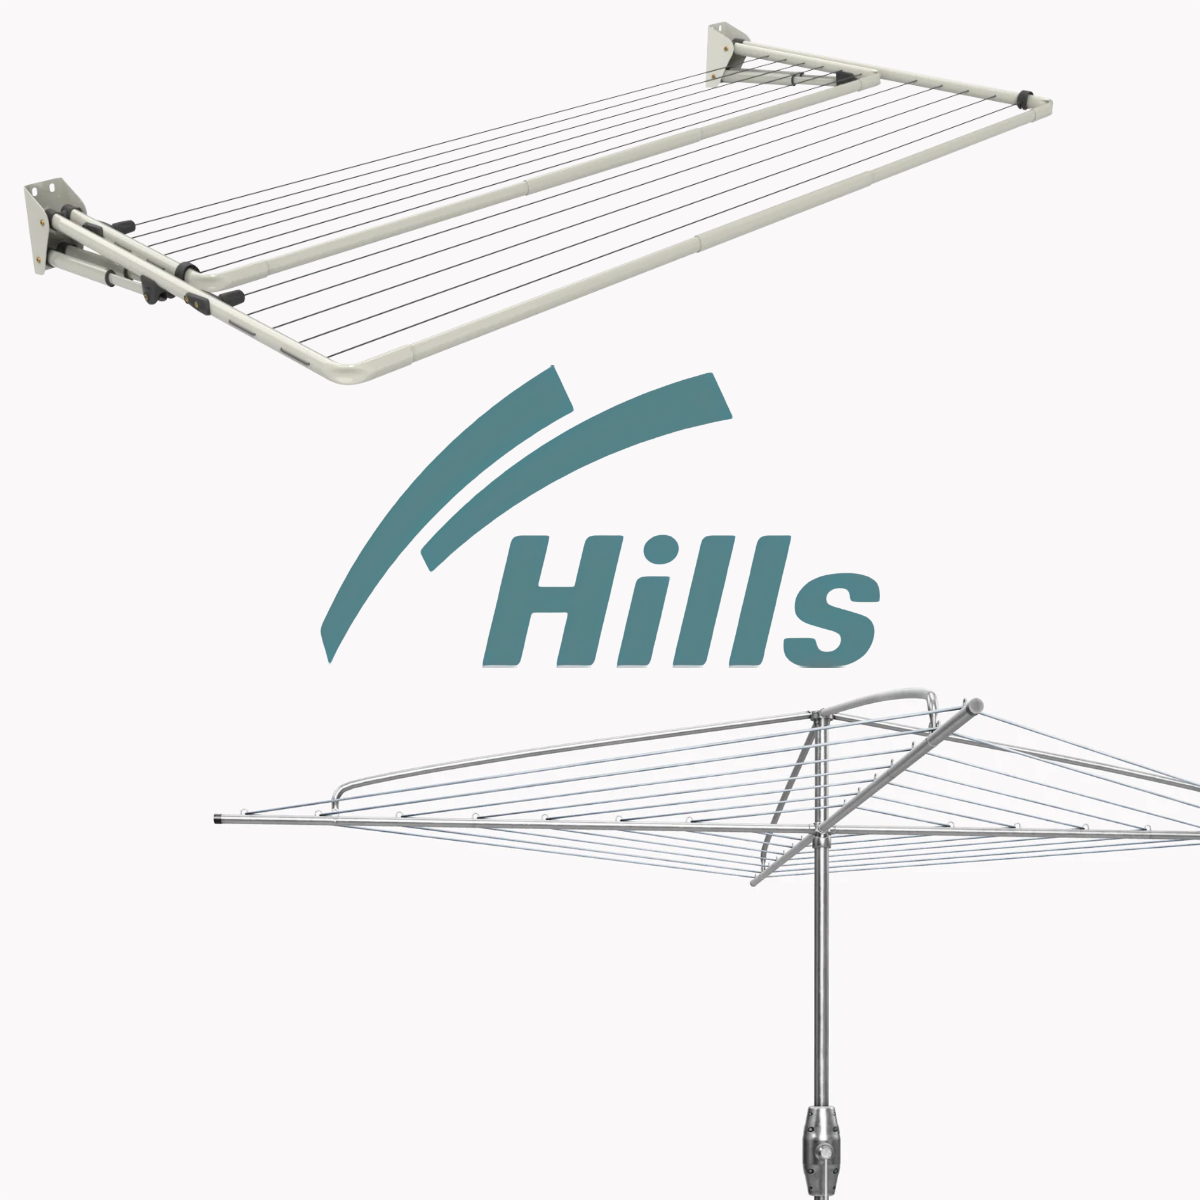 hills vs austral clothesline products